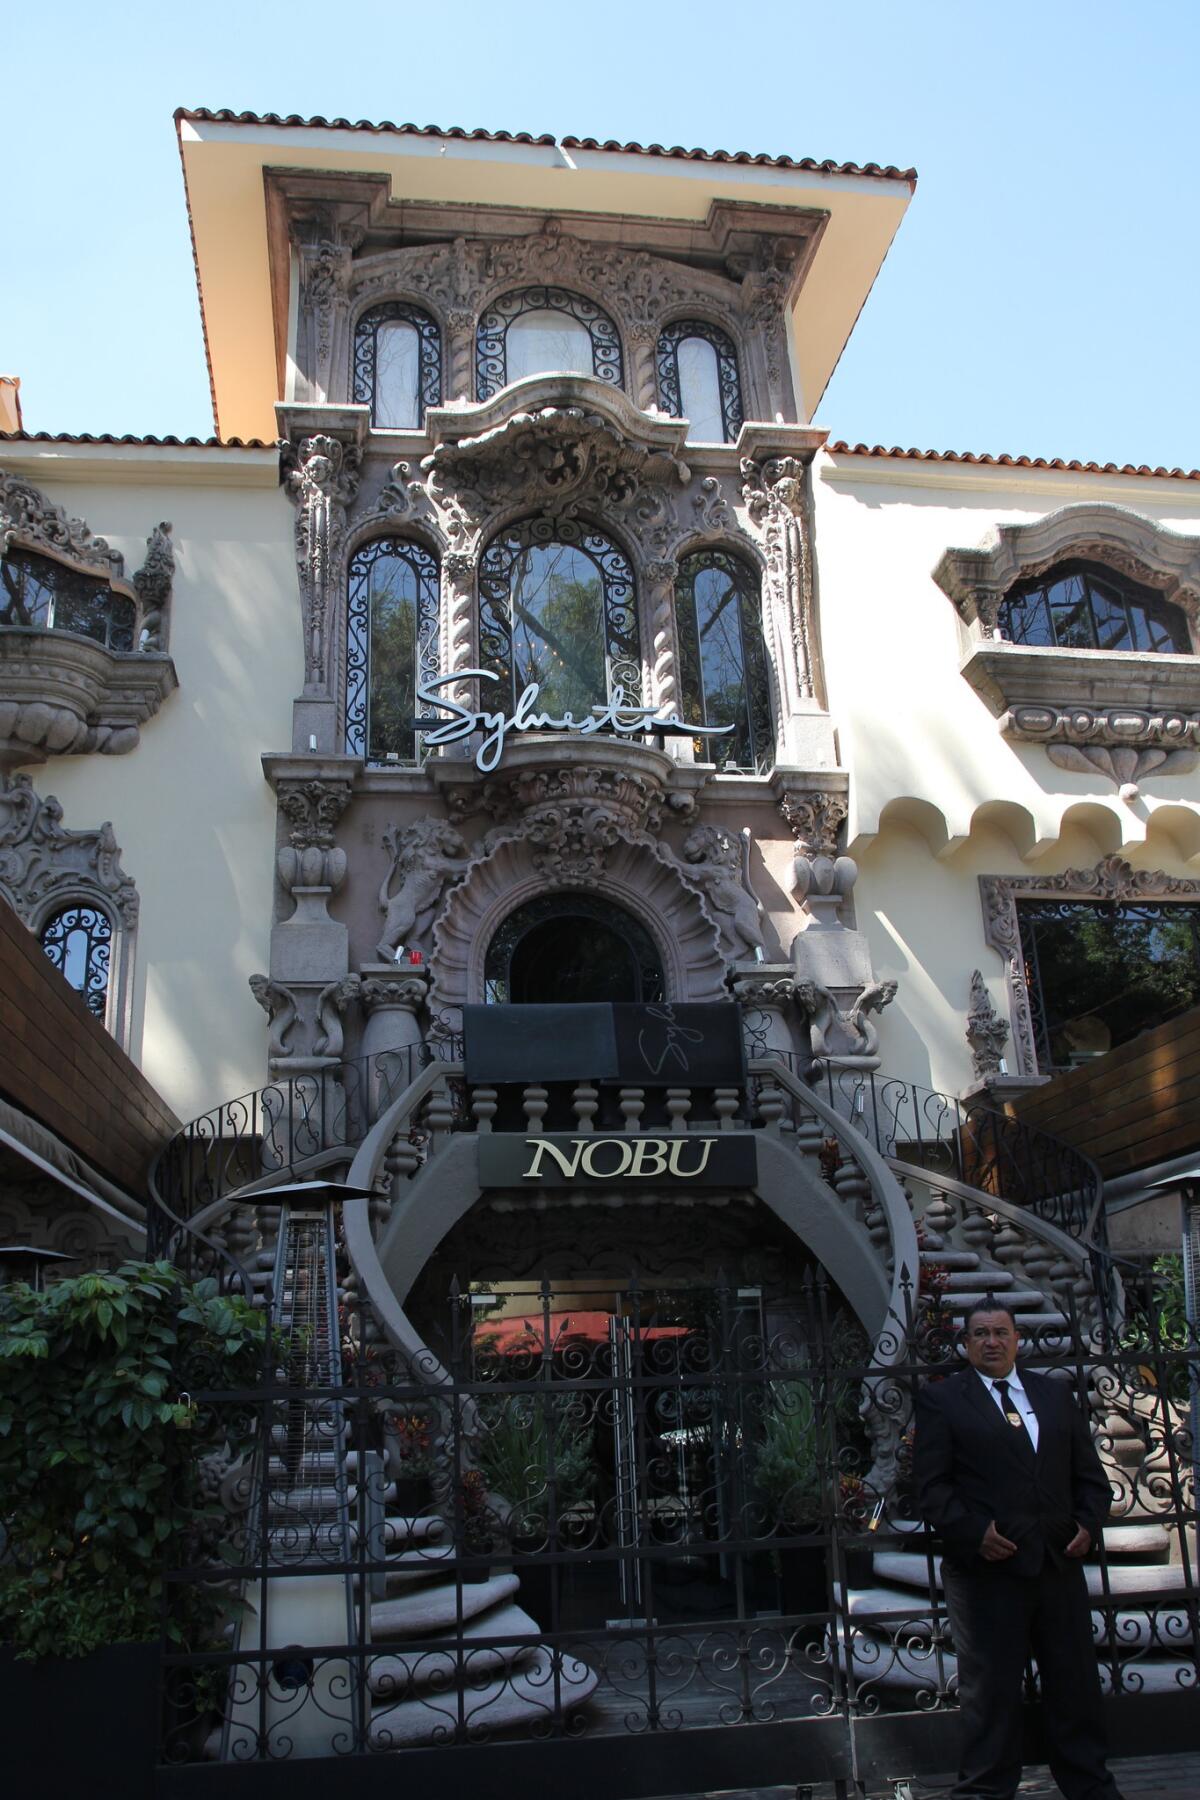 Colonial architecture, Polanco, upscale neighborhood, Mexico City